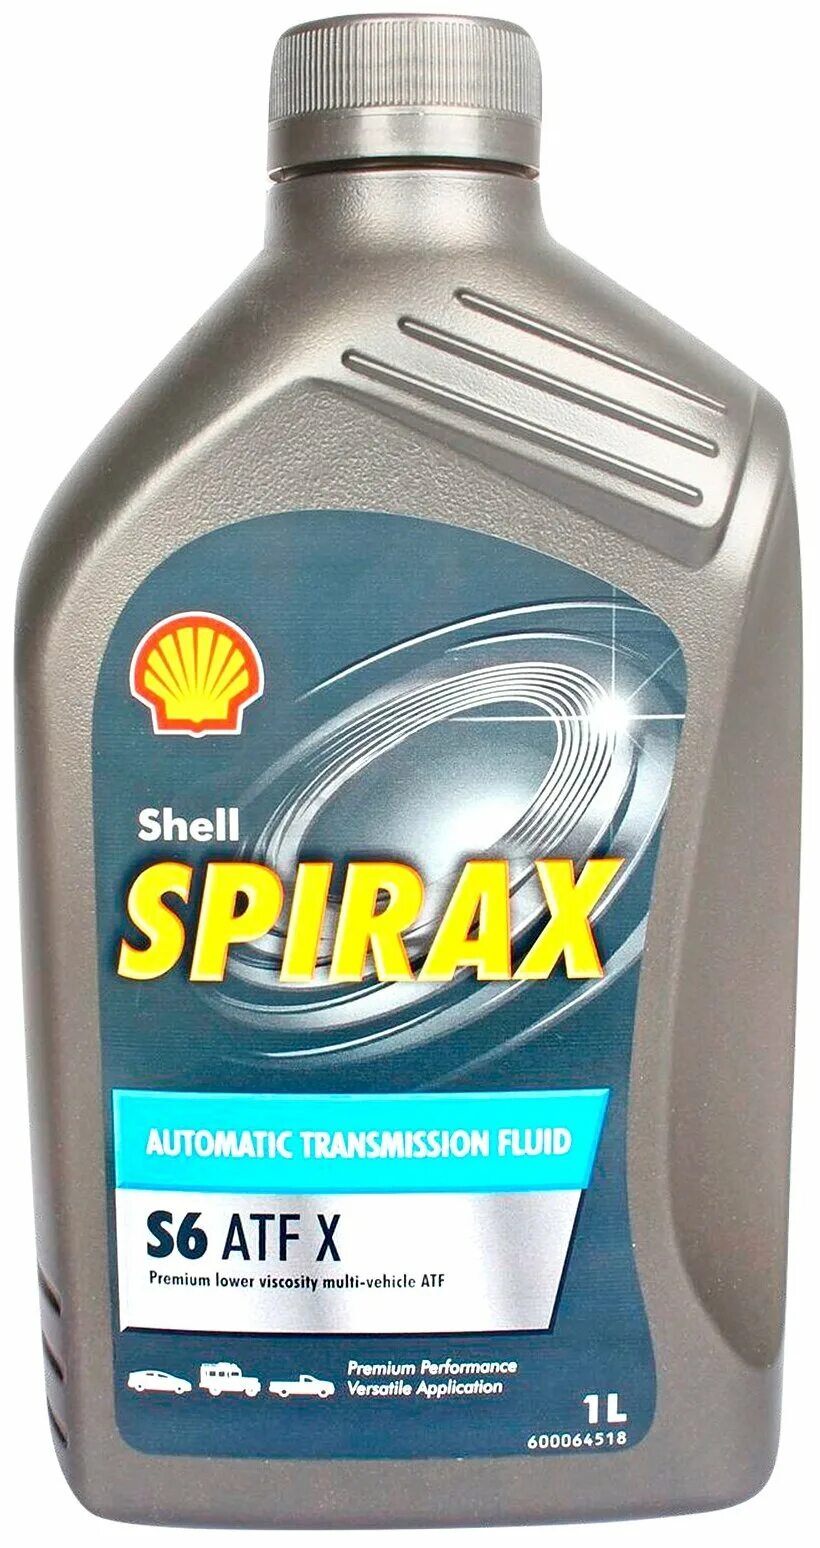 Shell Spirax s6 ATF. Shell Spirax s6 ATF X. Трансмиссионное масло Shell Spirax s6 ATF X. Spirax s6 atf x